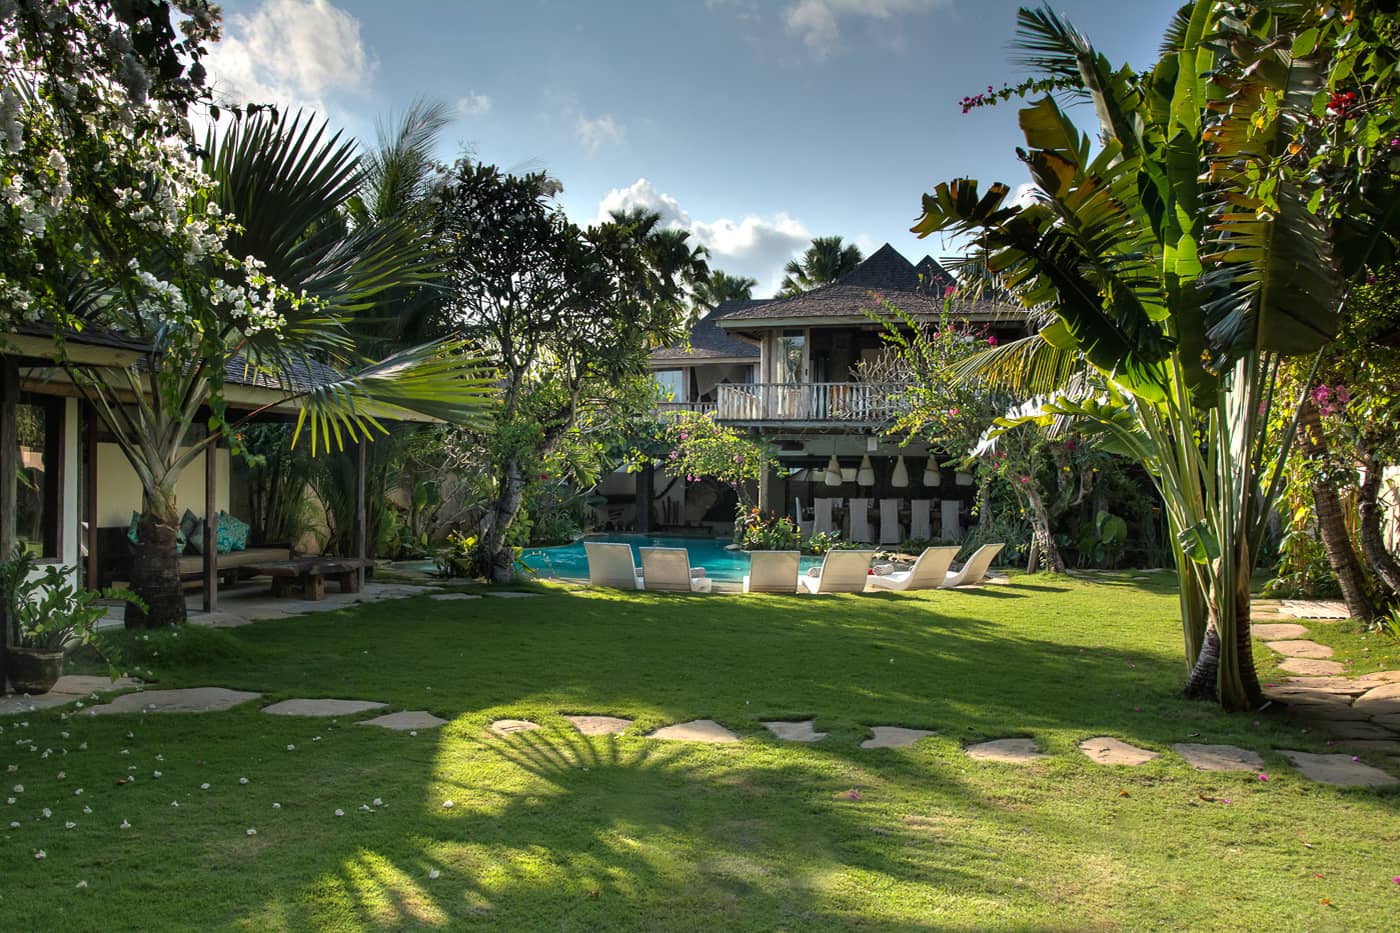 Villa Phinisi photos in Seminyak Bali